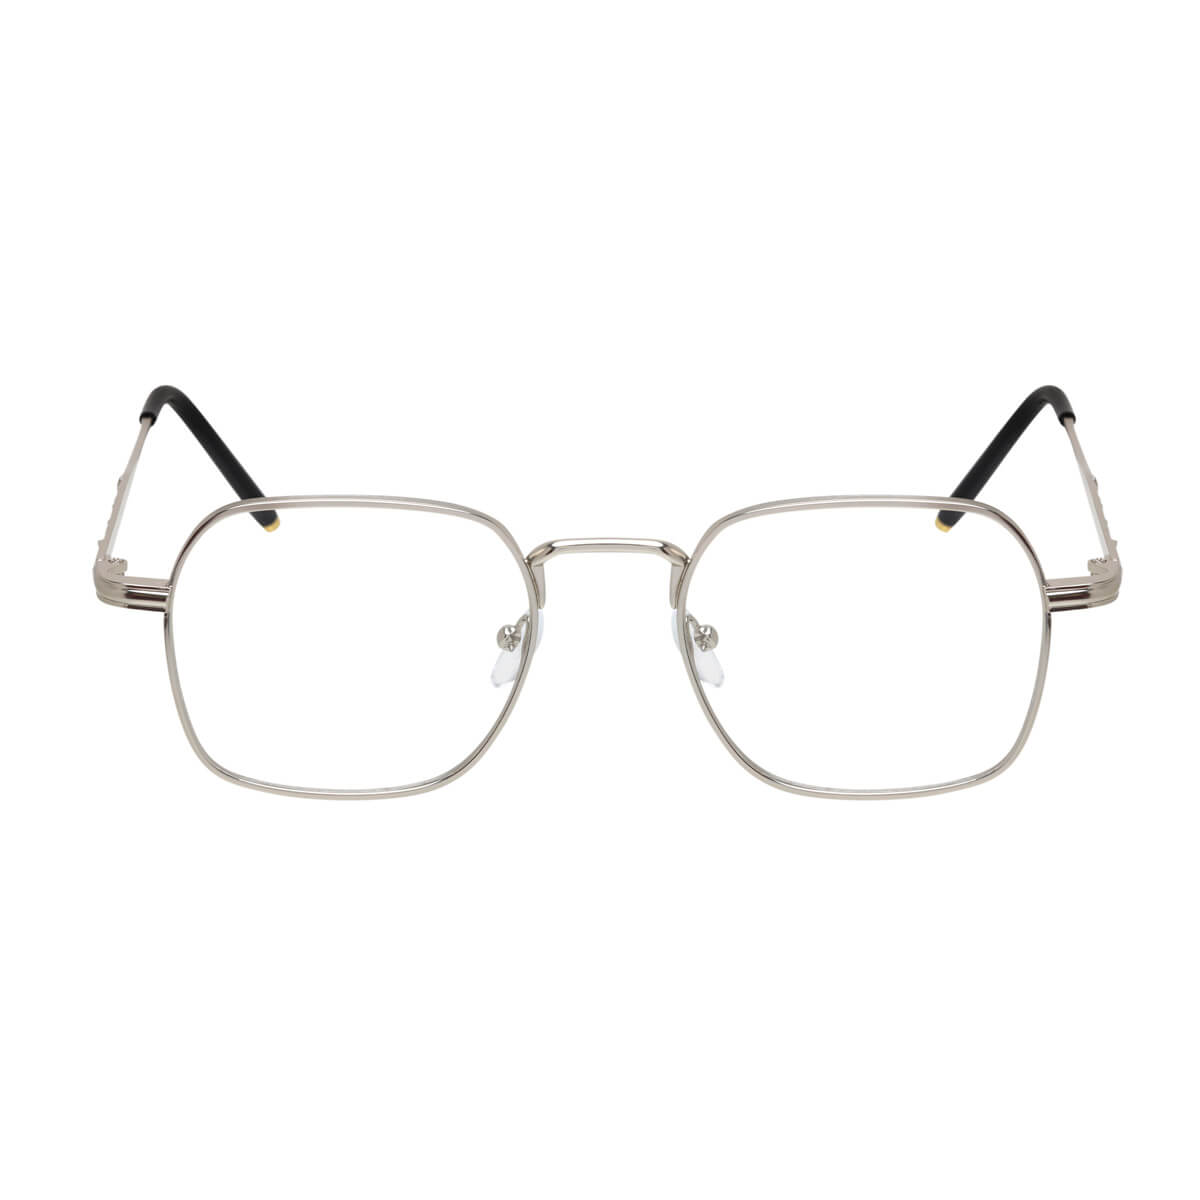 Angular Square Imagolas falska glasögon